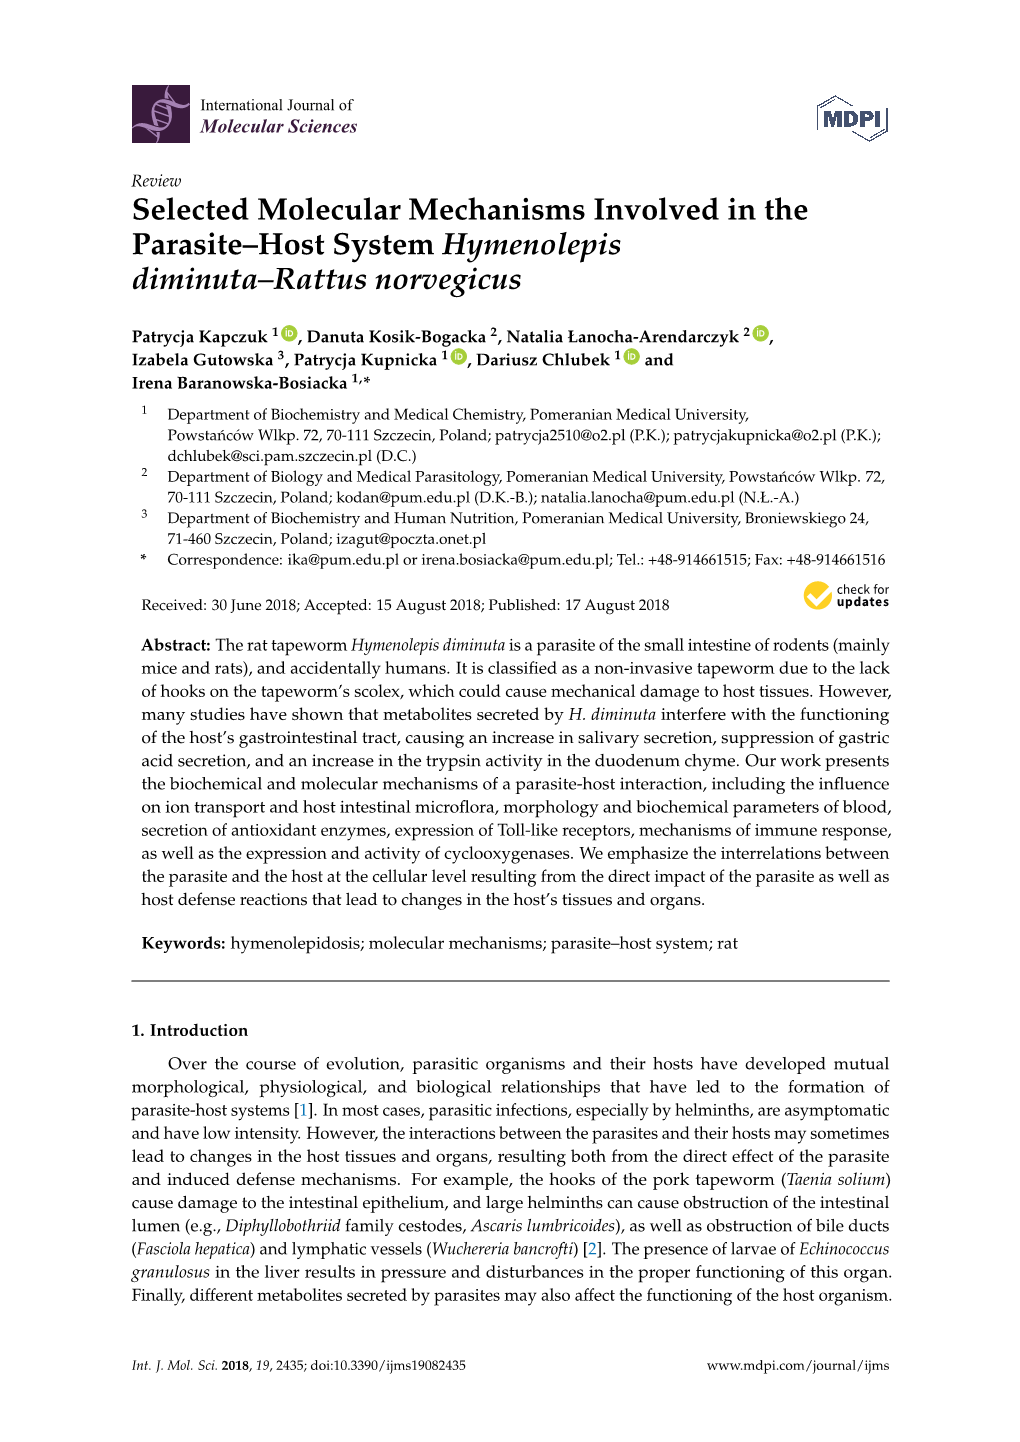 Selected Molecular Mechanisms Involved in the Parasite–Host System Hymenolepis Diminuta–Rattus Norvegicus